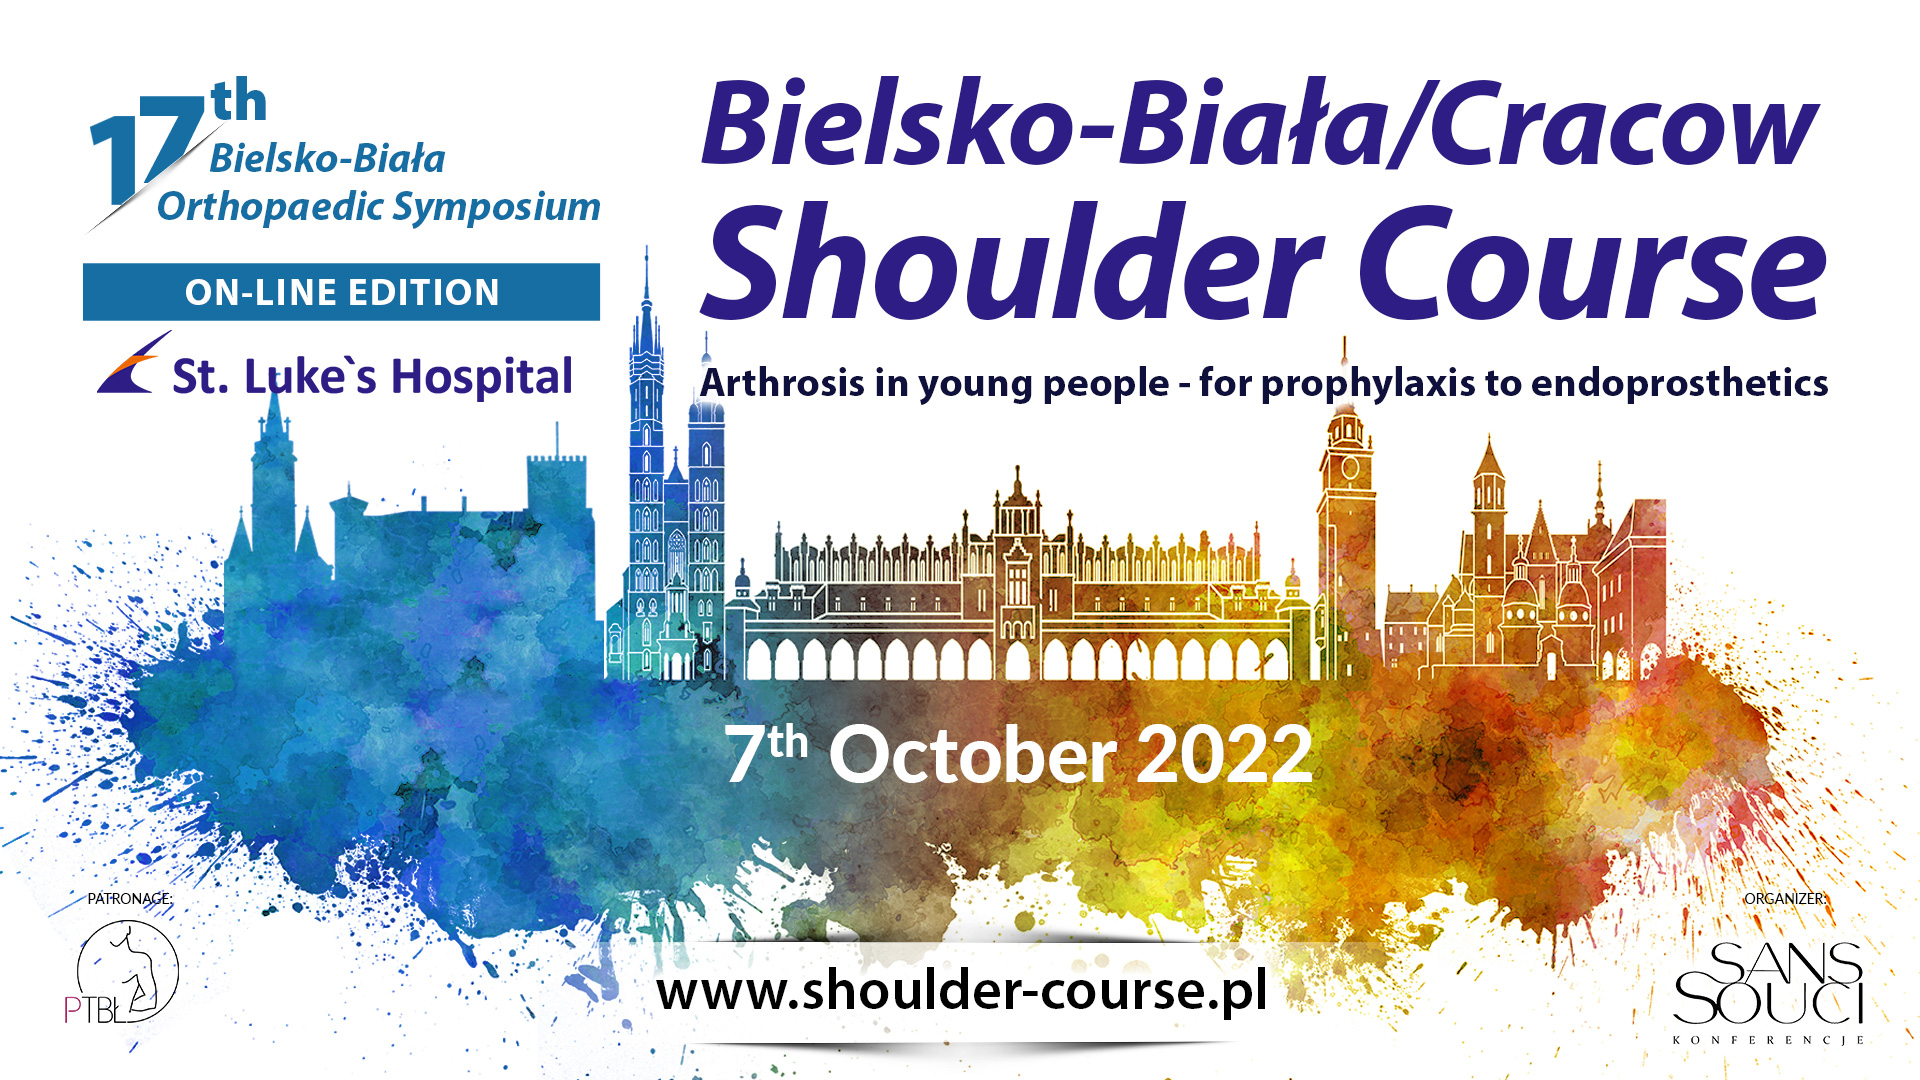 Bielsko-Biała/Cracow Shoulder Course 7 październik 2022 r.